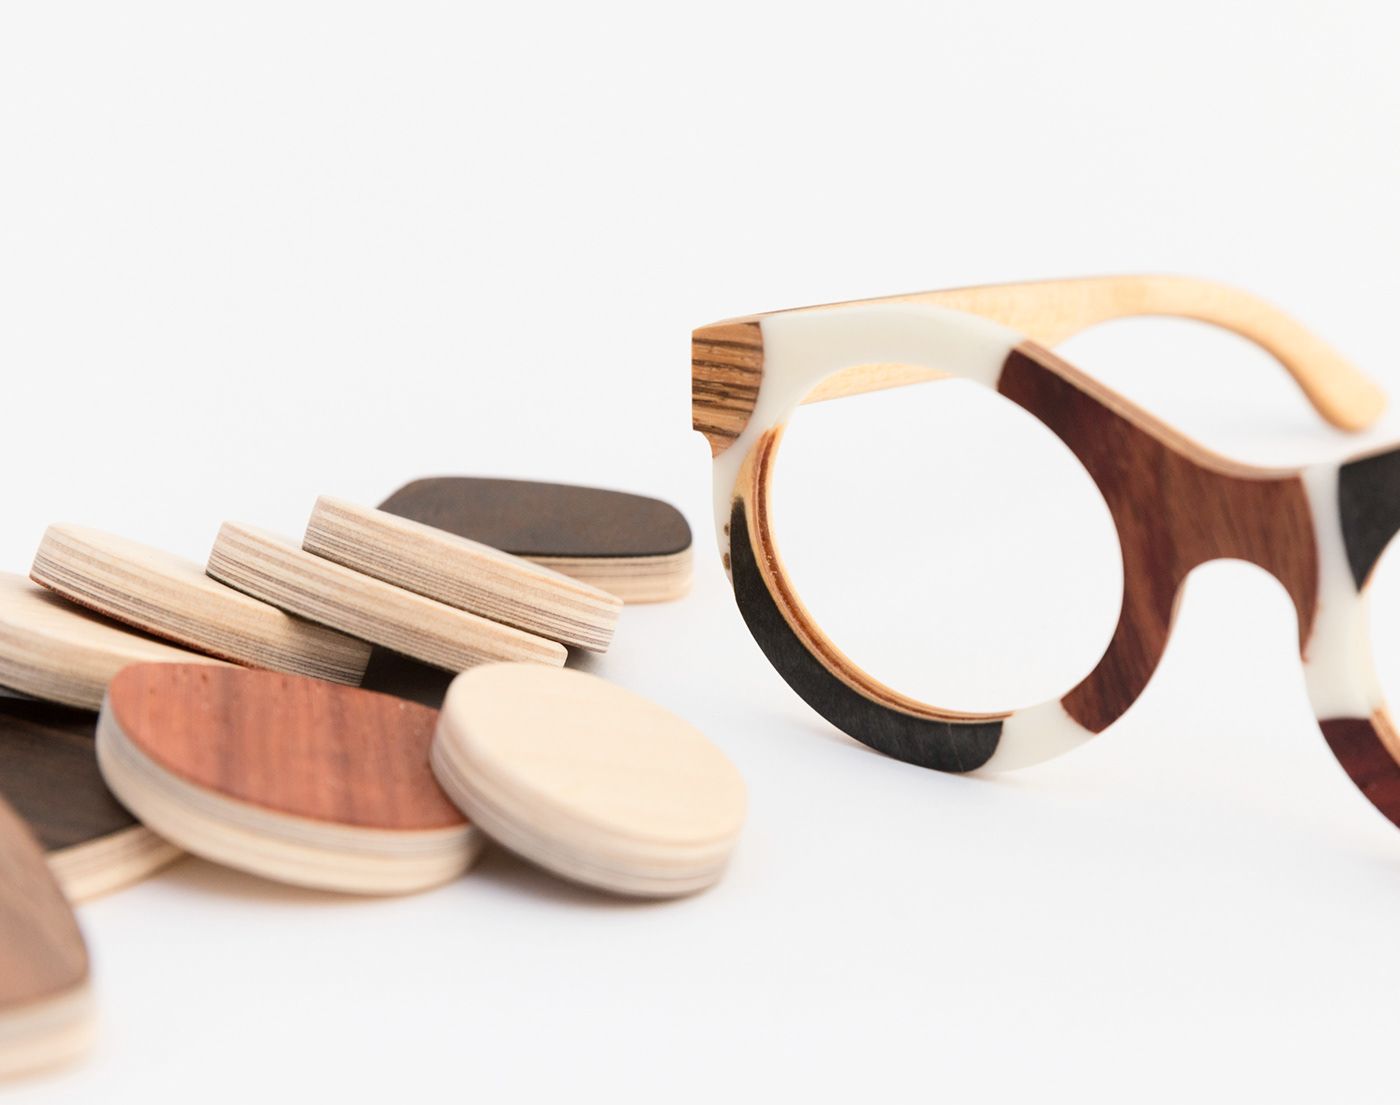 novo sebastianotonelli glasses waste materials recycling wood crafts   wooclass resin